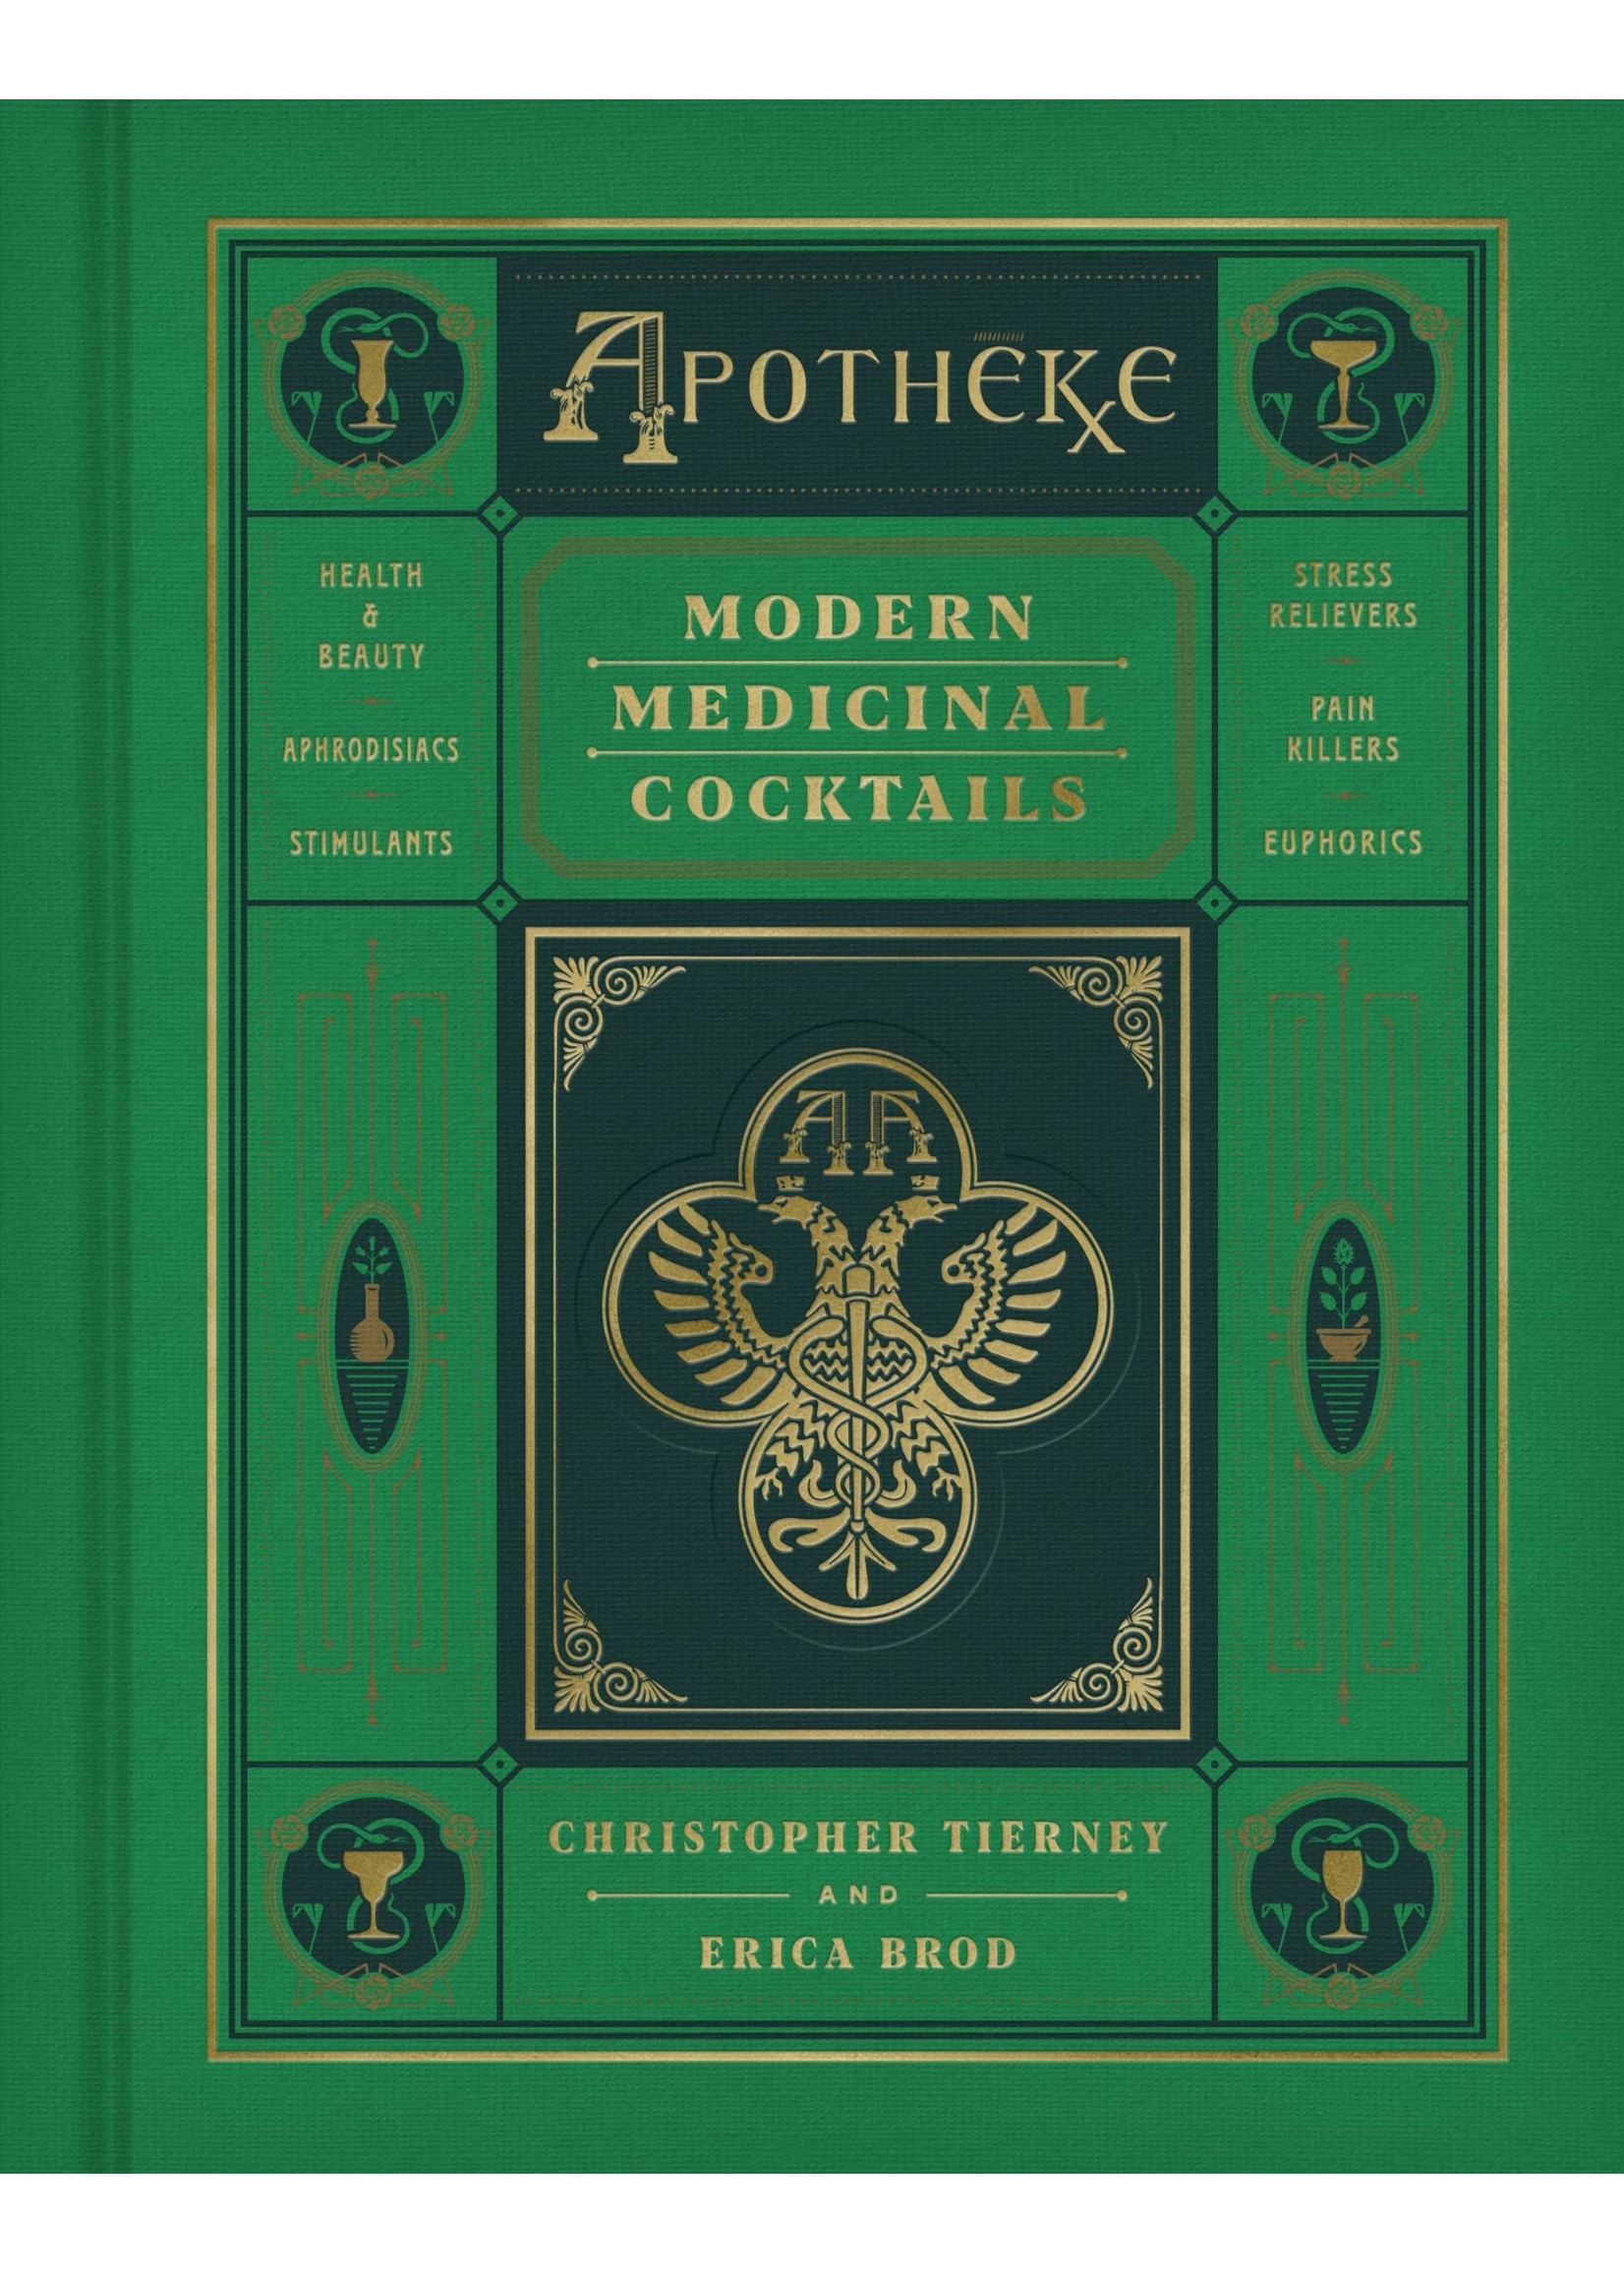 Apotheke: Modern Medicinal Cocktails